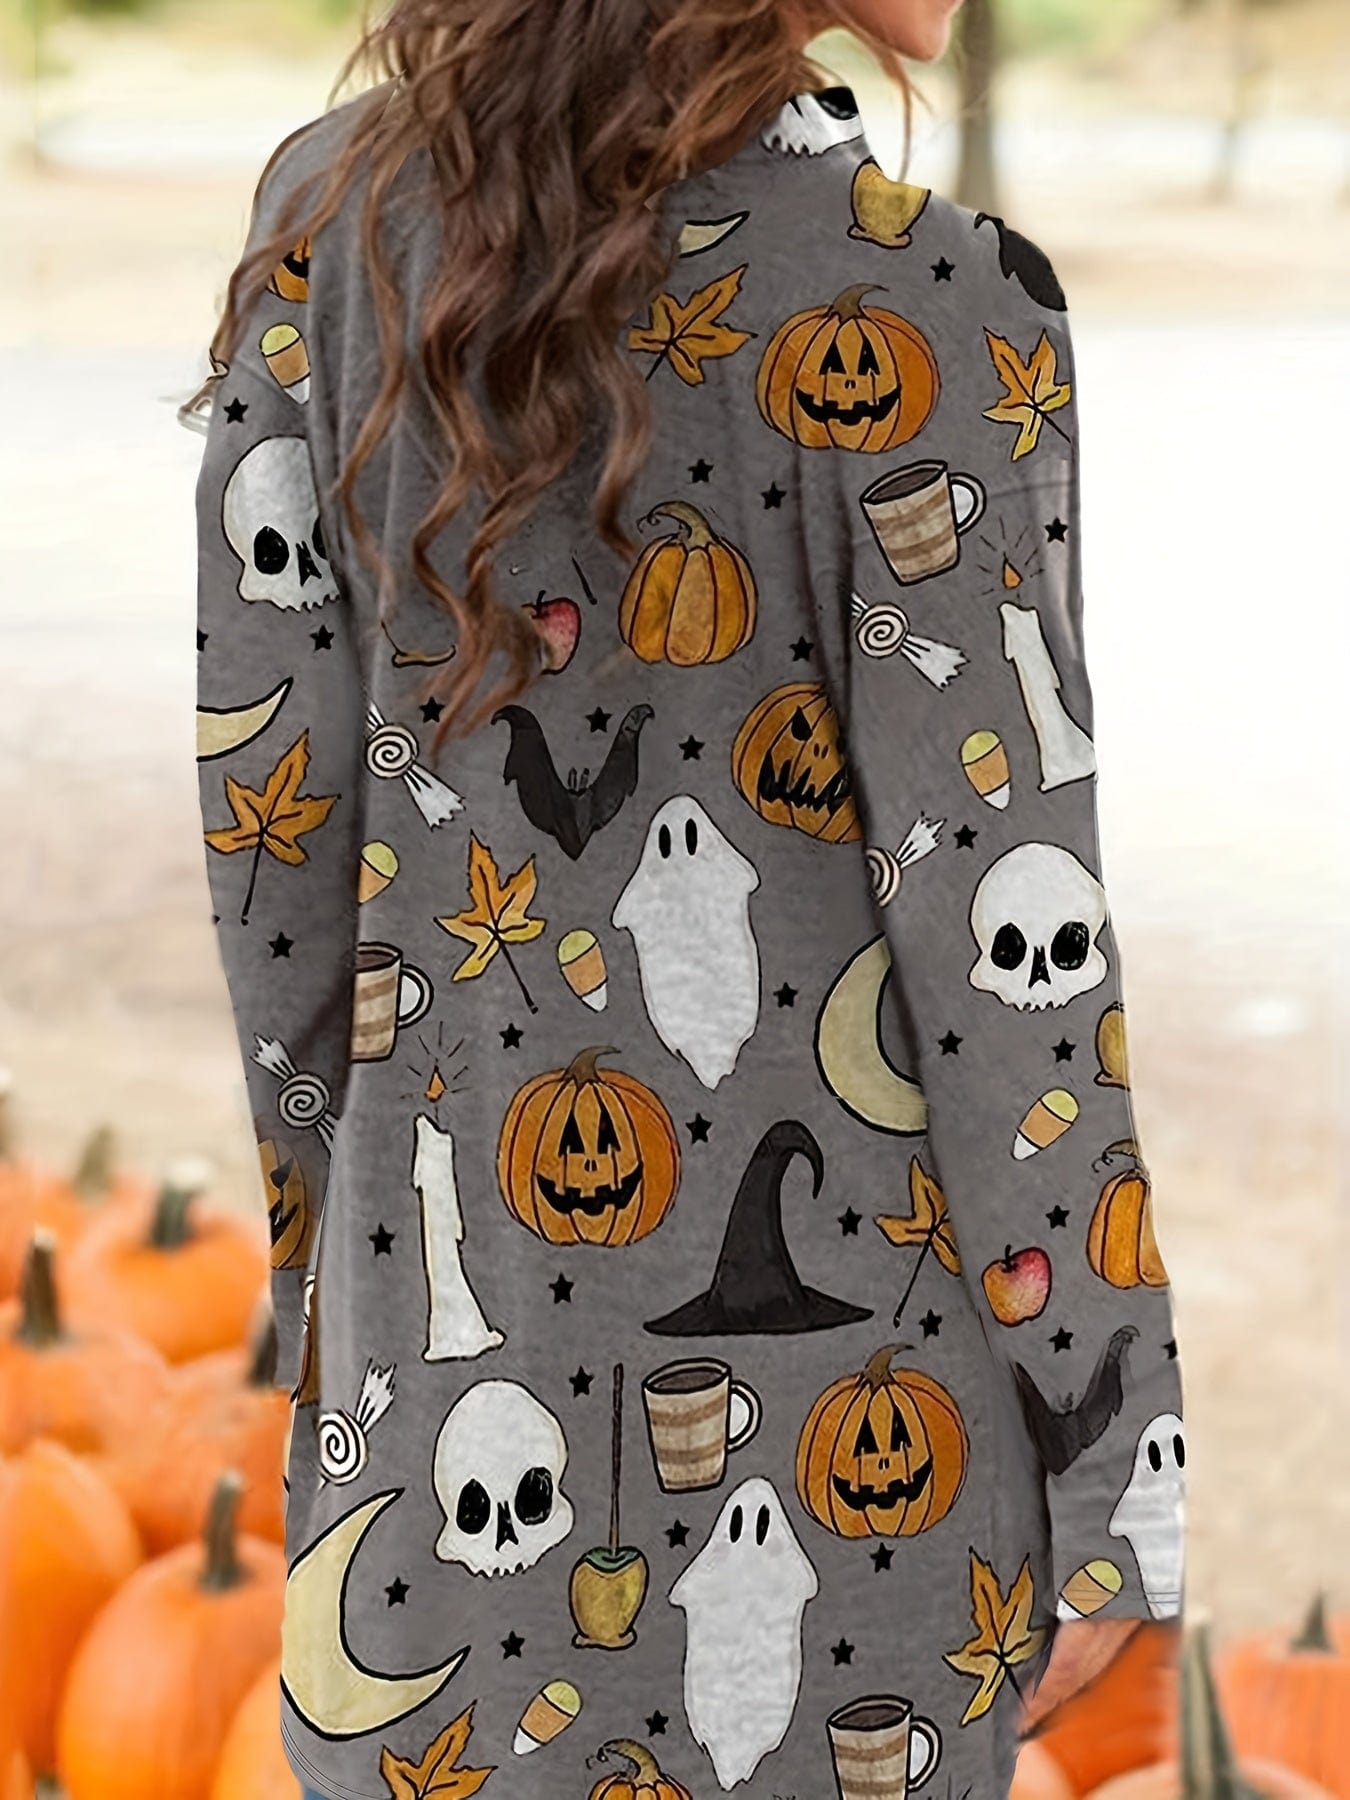 Plus Size Halloween Cardigan, Women's Plus Cartoon Pumpkin & Skull Print Long Sleeve Open Front Sweater Cardigan